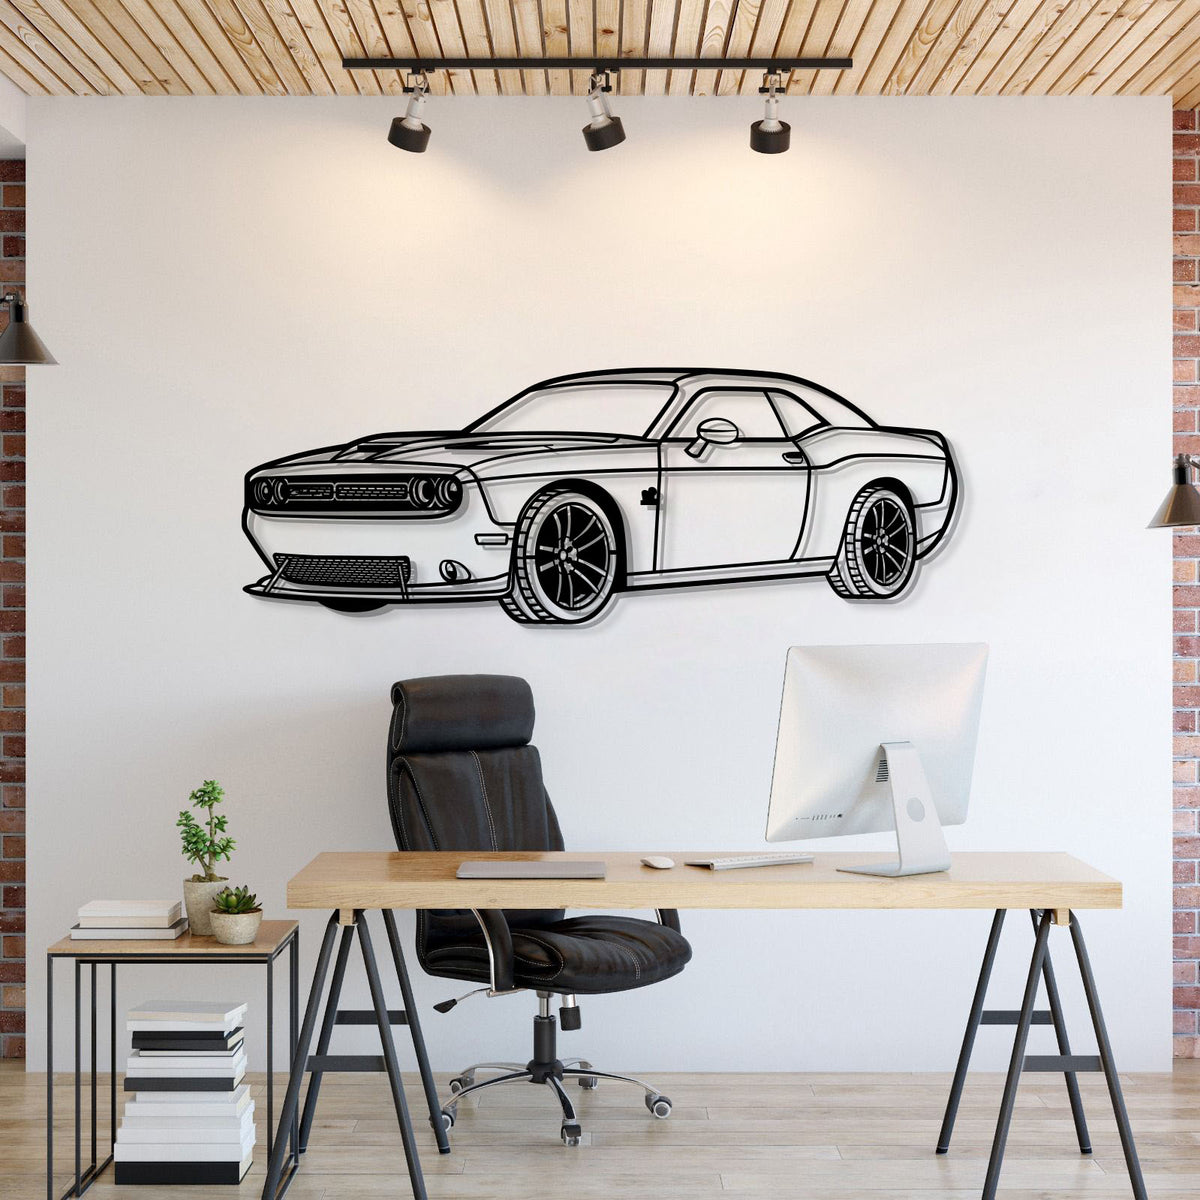 2019 Challanger SRT Perspective Metal Car Wall Art - MT1261